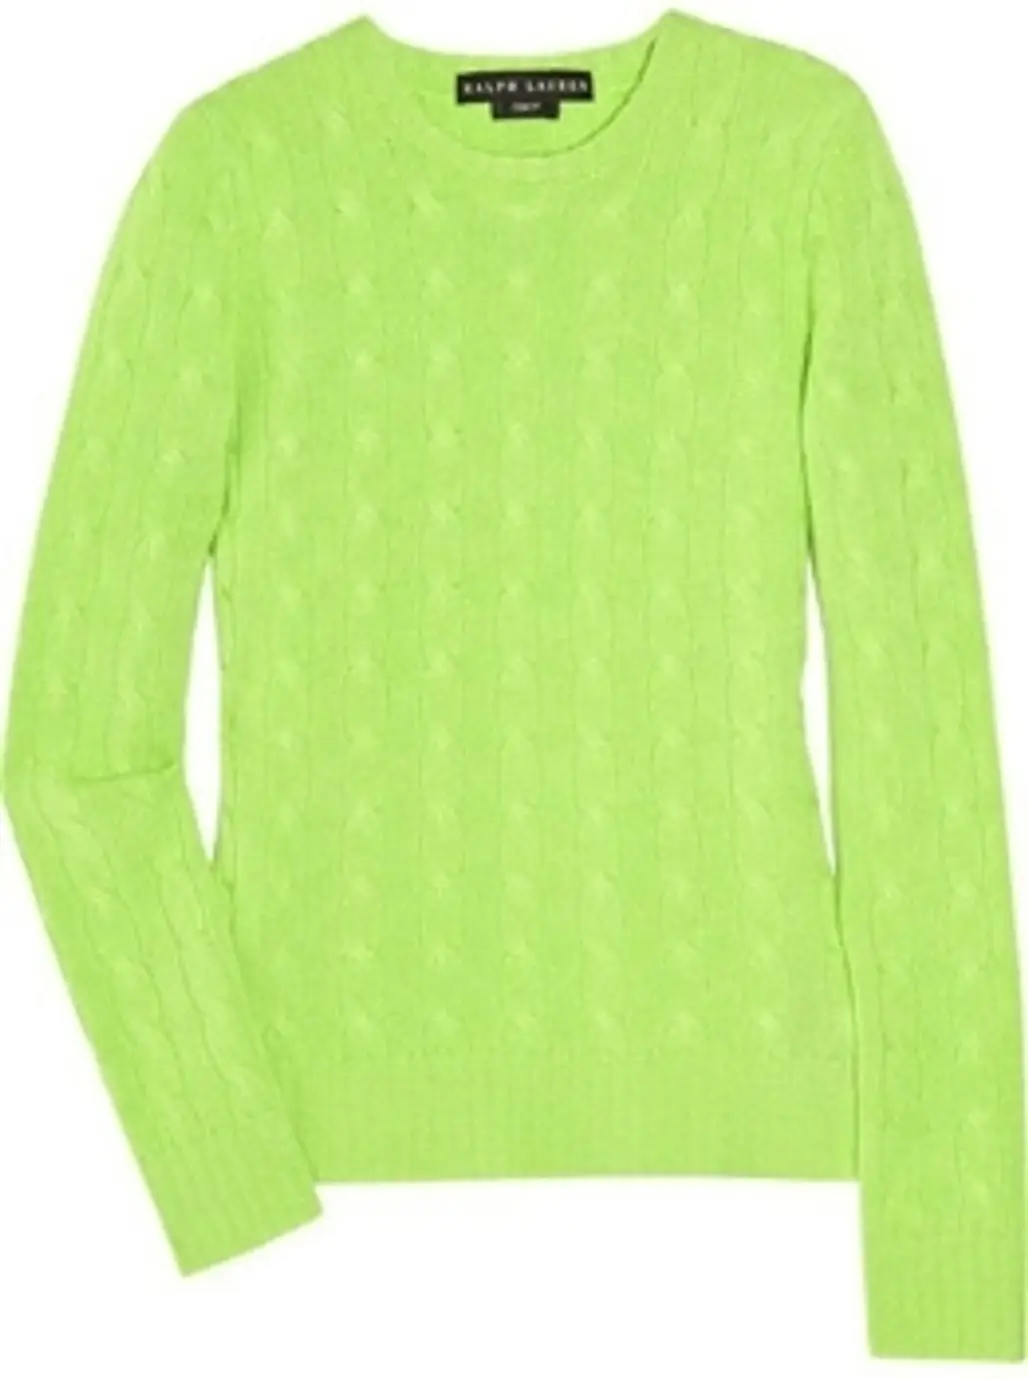 Ralph Lauren Black Label Cashmere Sweater